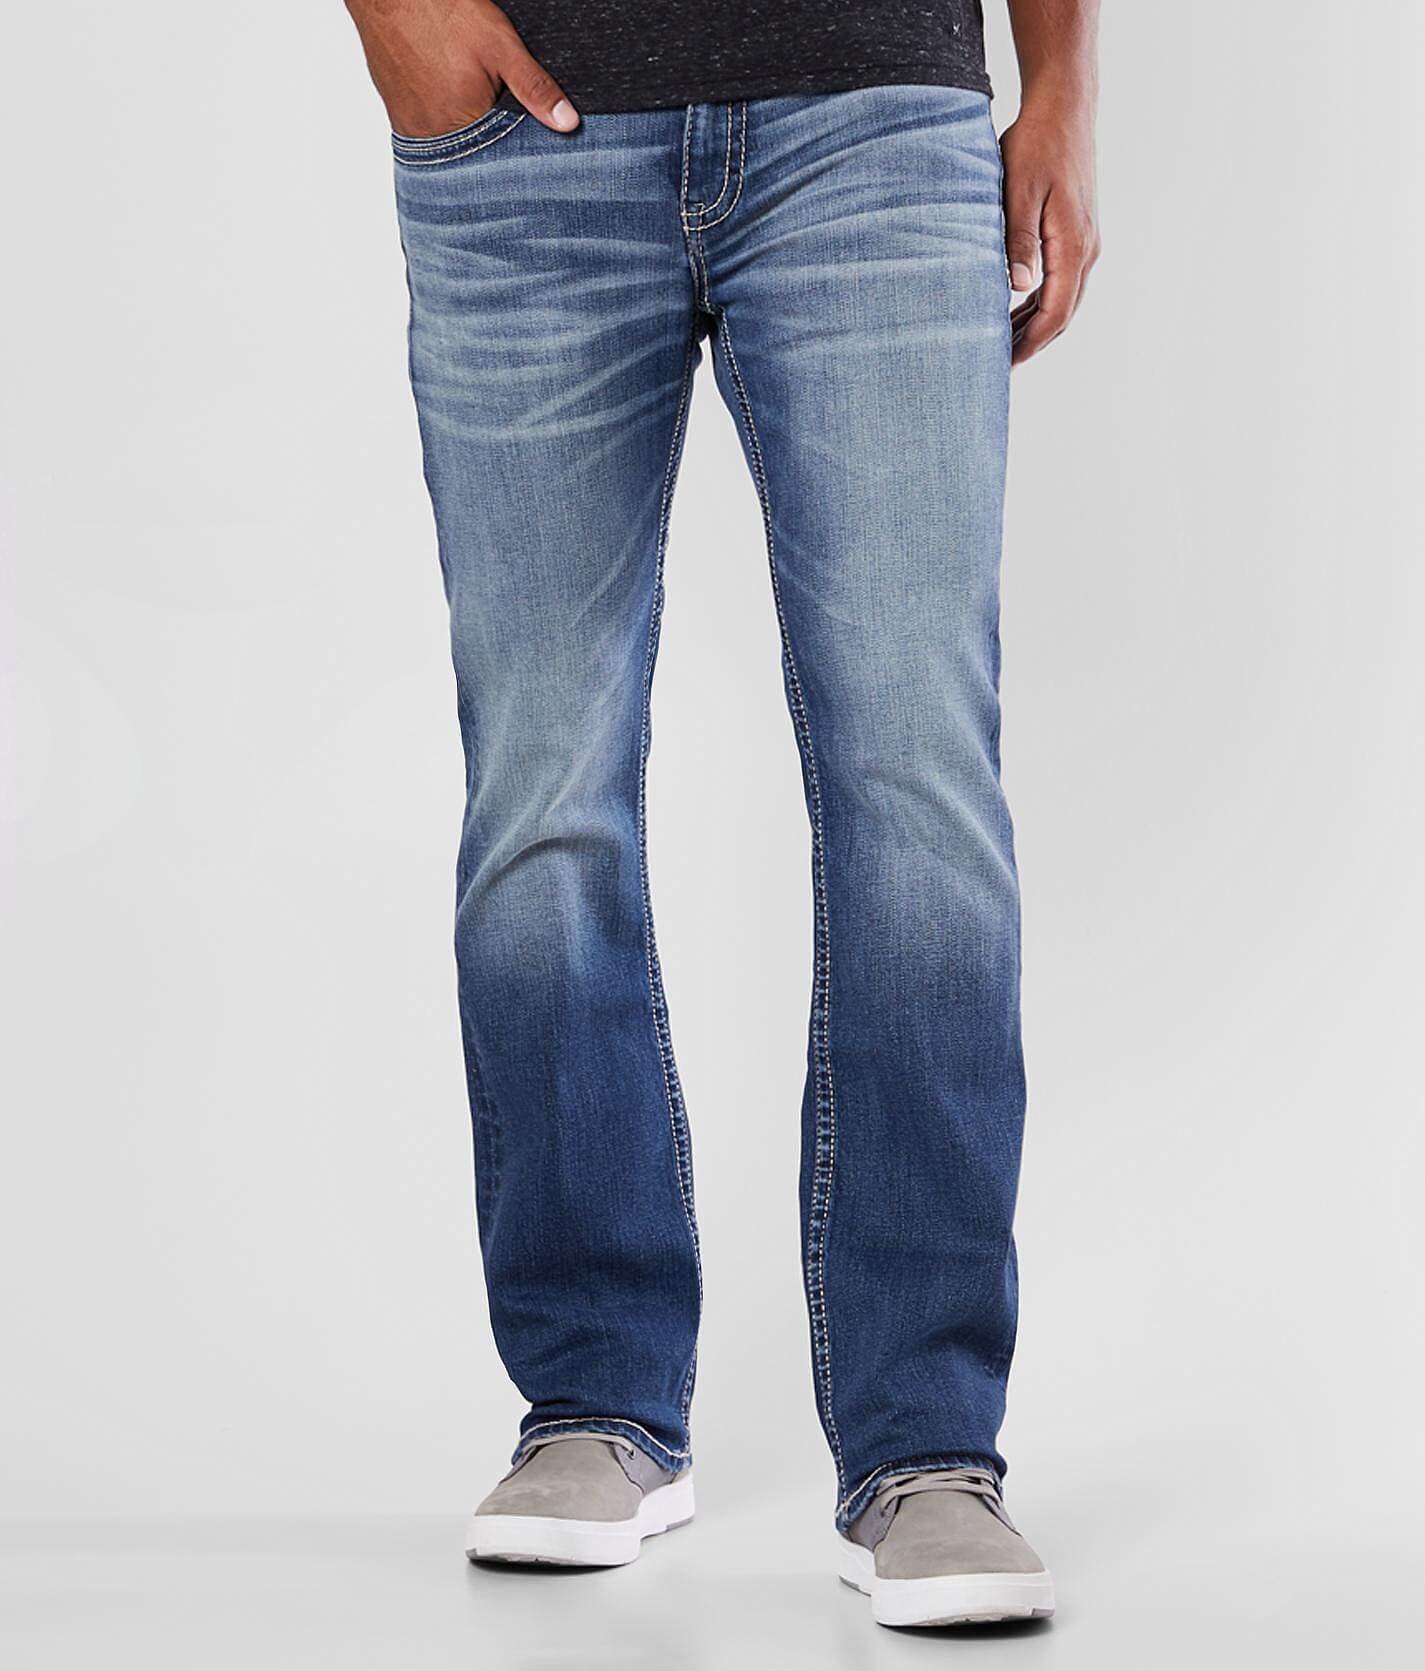 wrangler 80s jeans